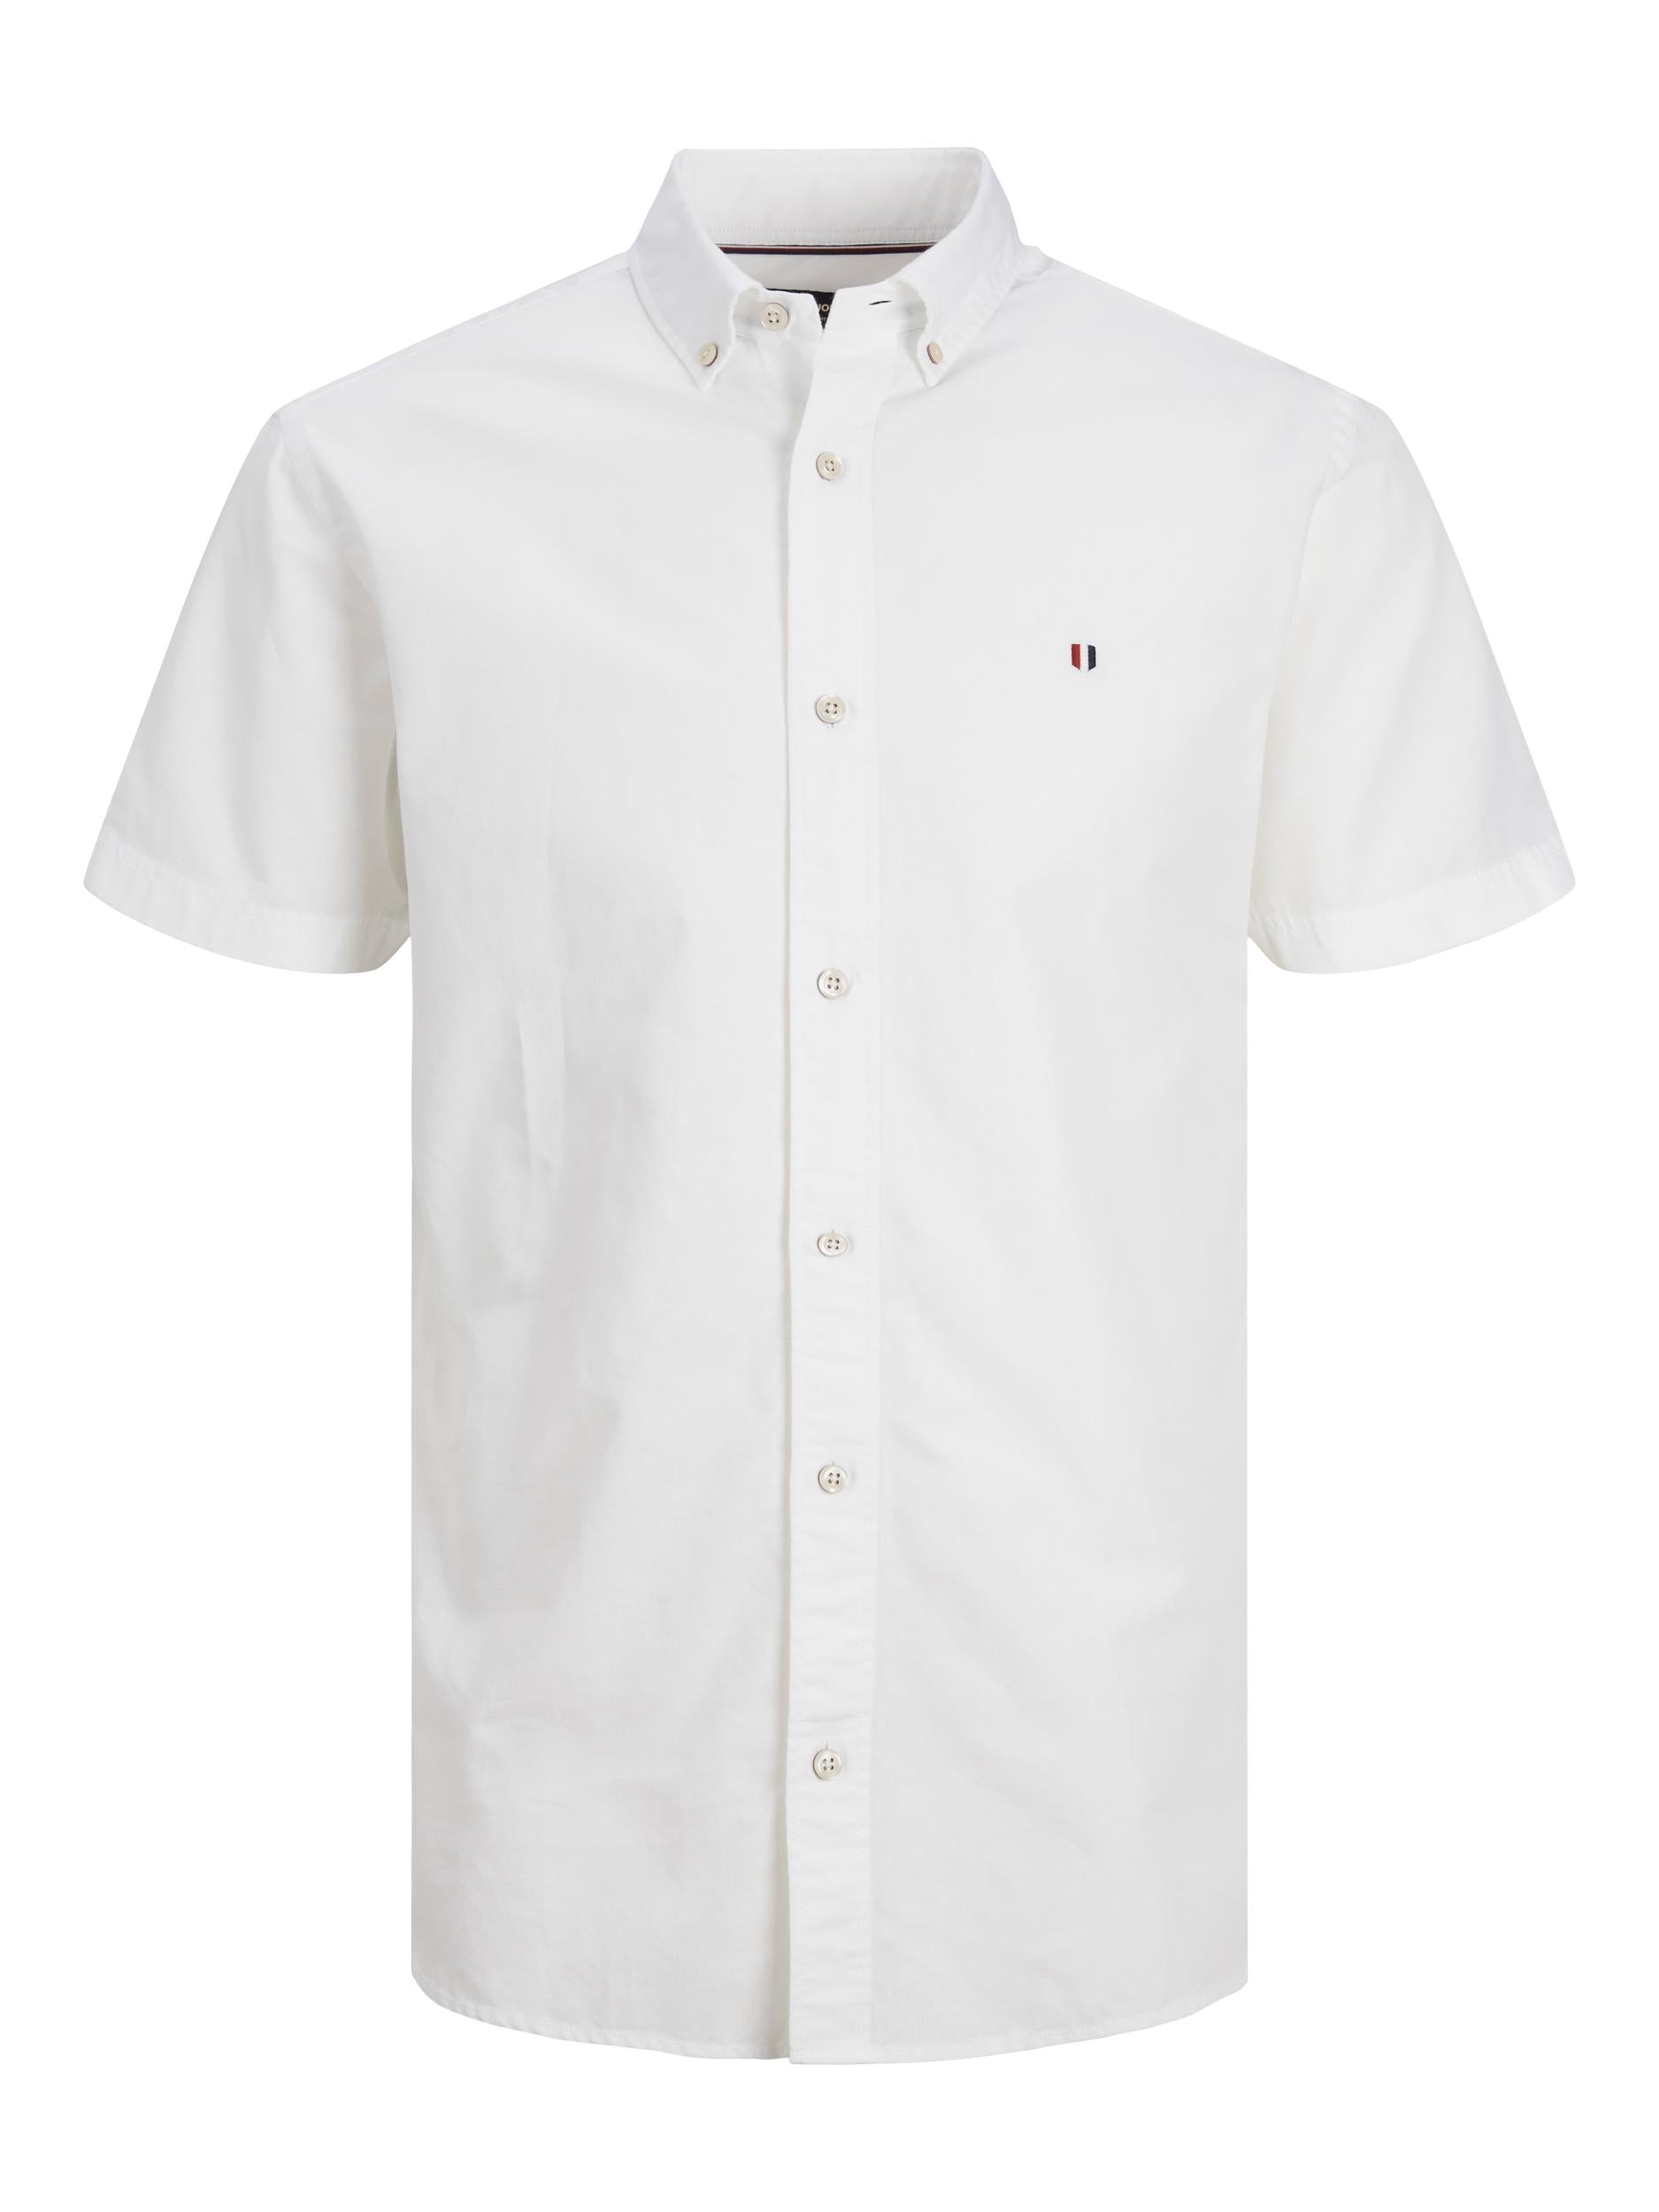 Men's Summer Shield Short Sleeve White Shirt-Front View